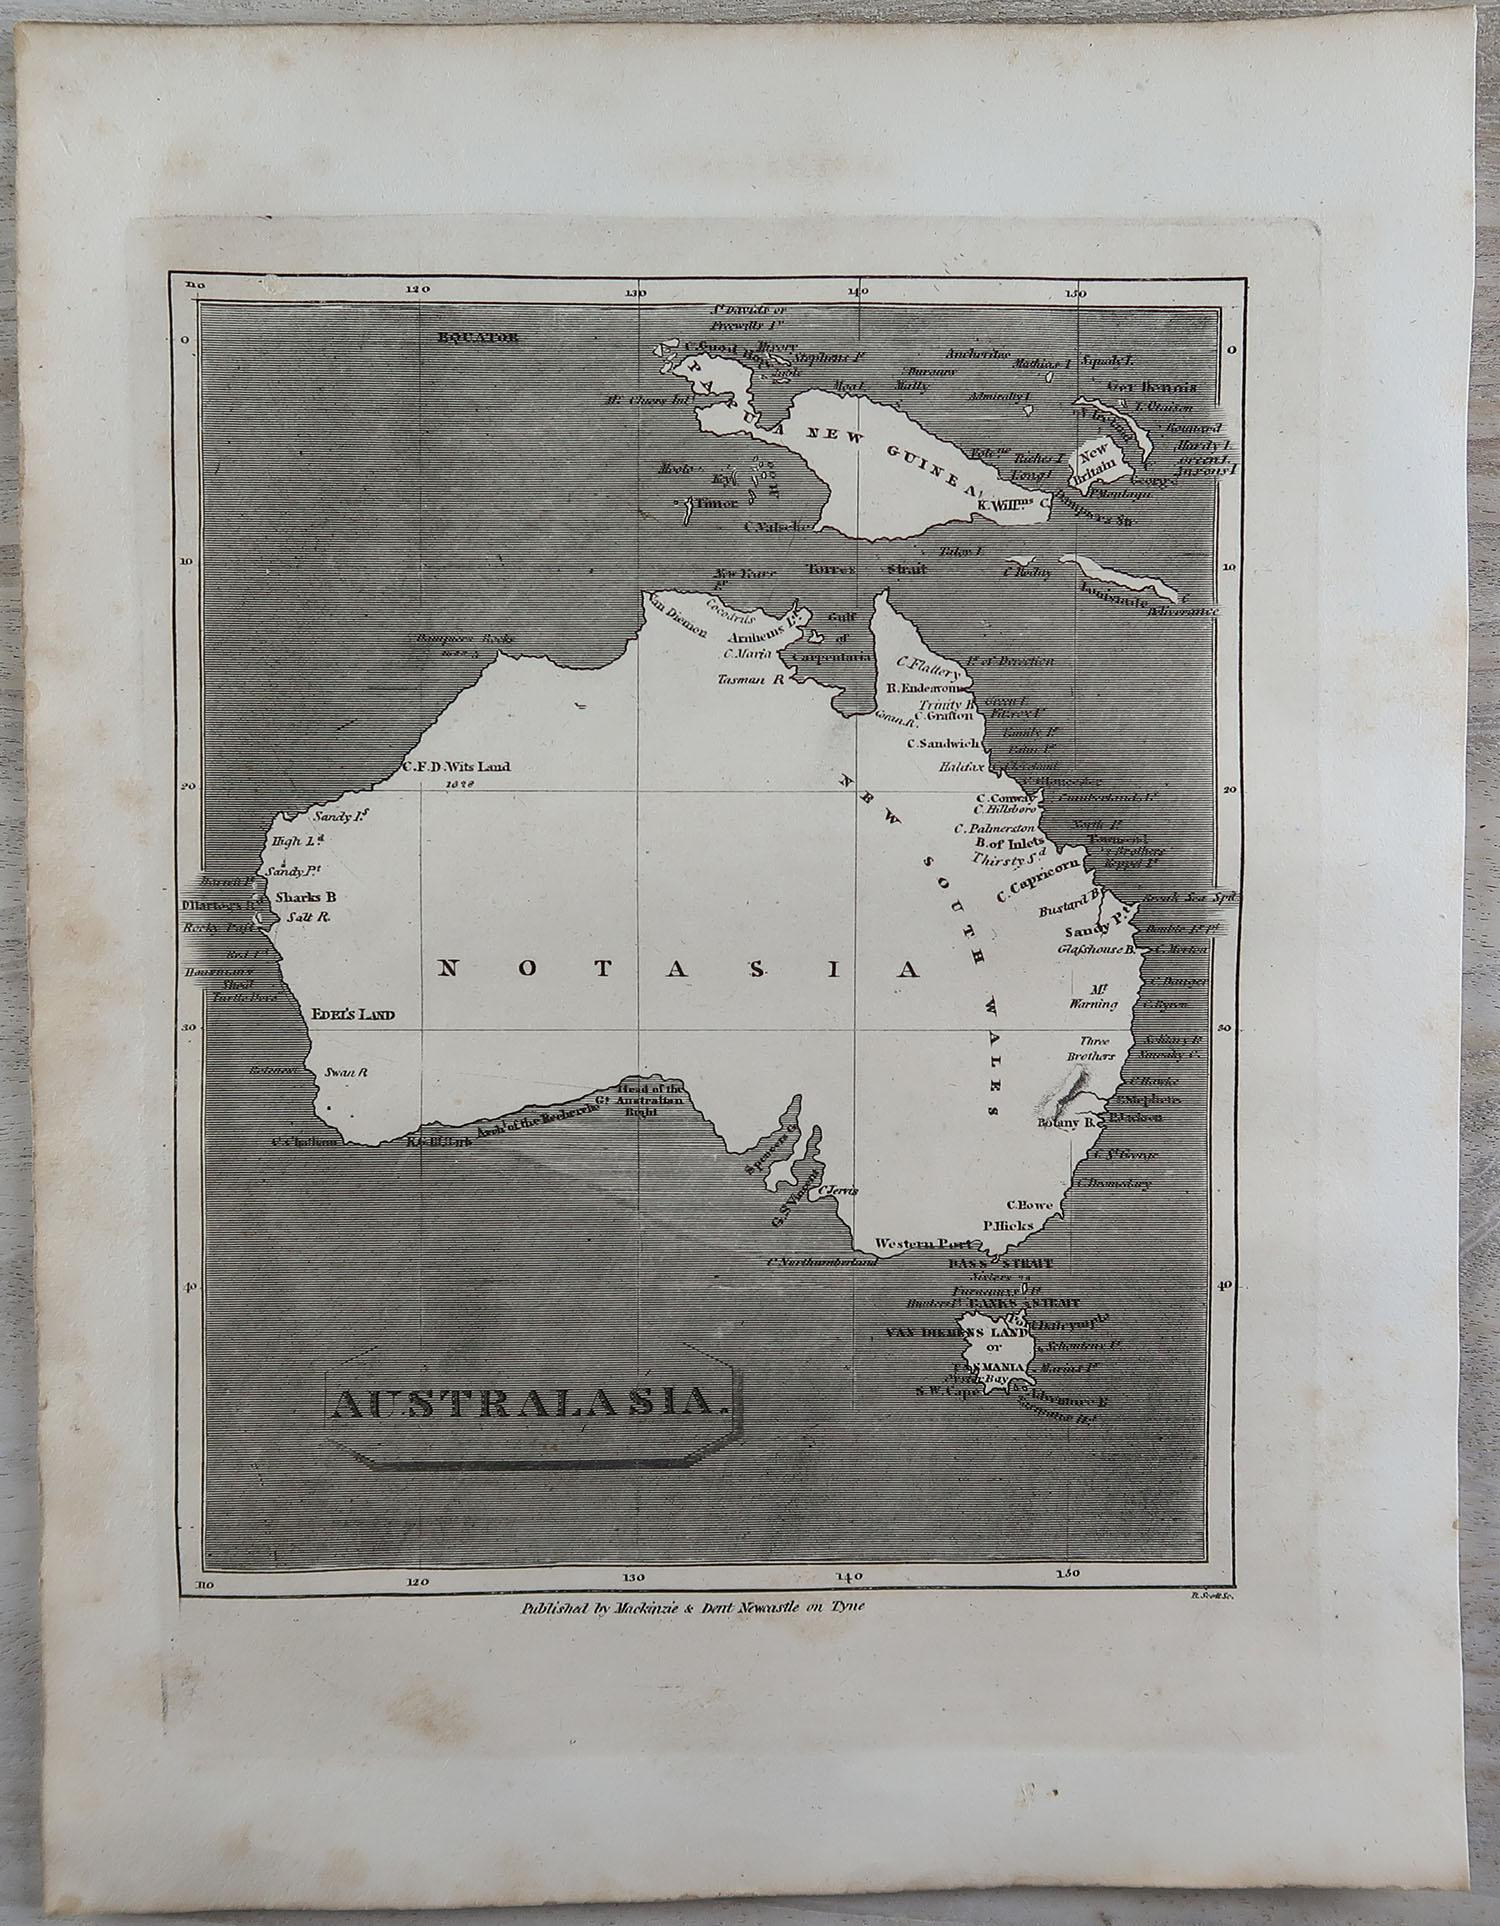 English Original Antique Map of Australia by Thomas Clerk, 1817